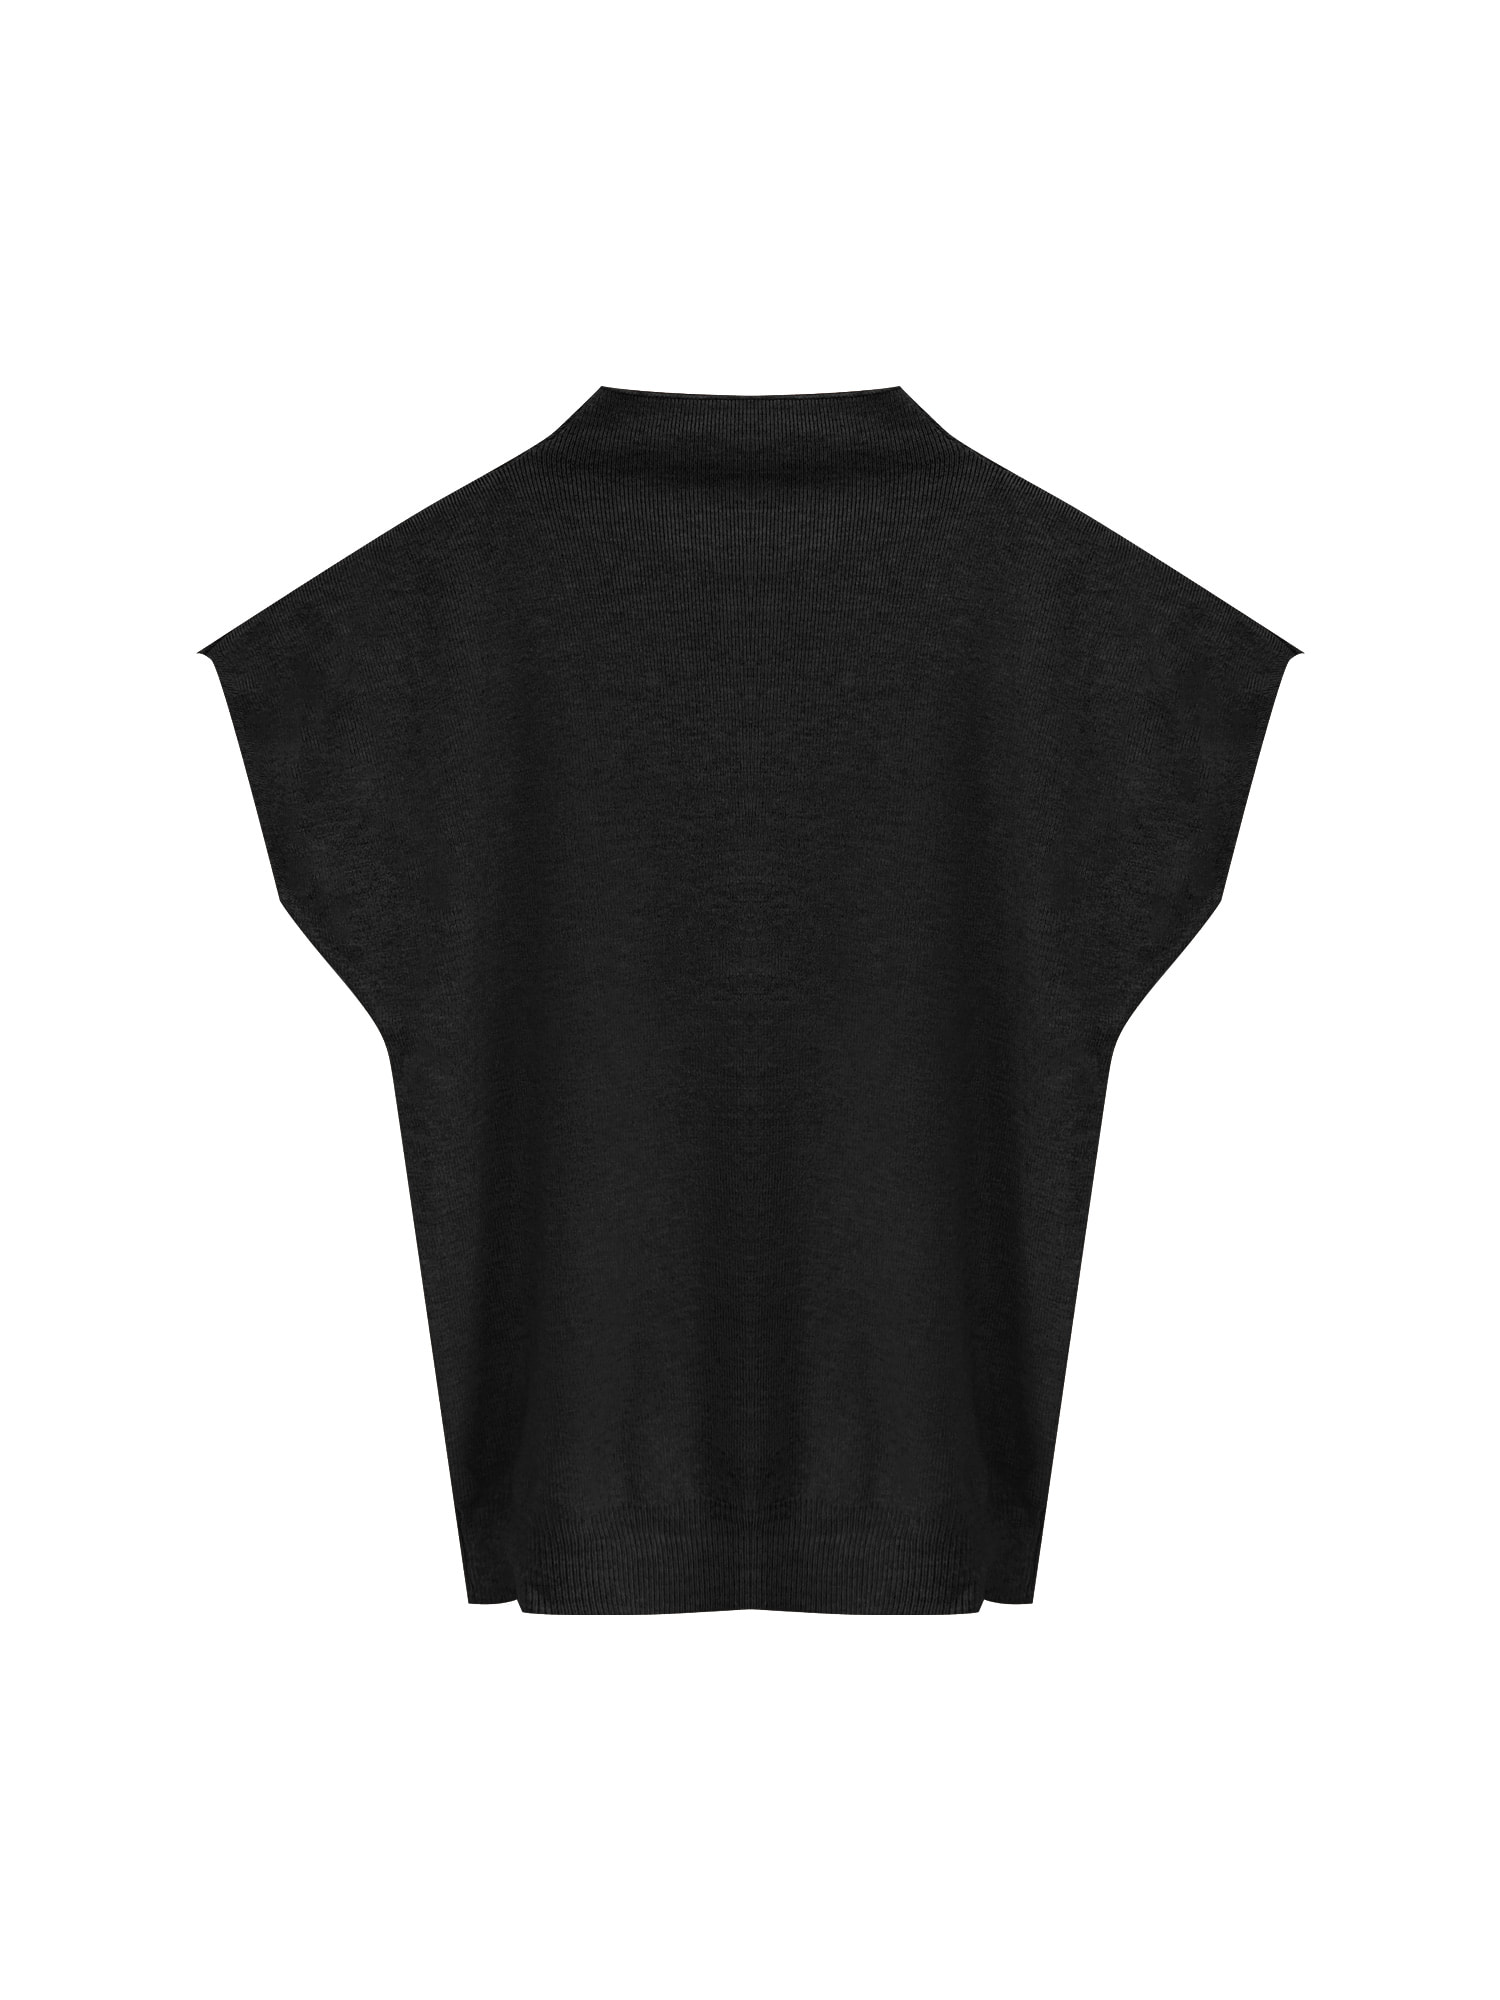 cashmere knit _ black